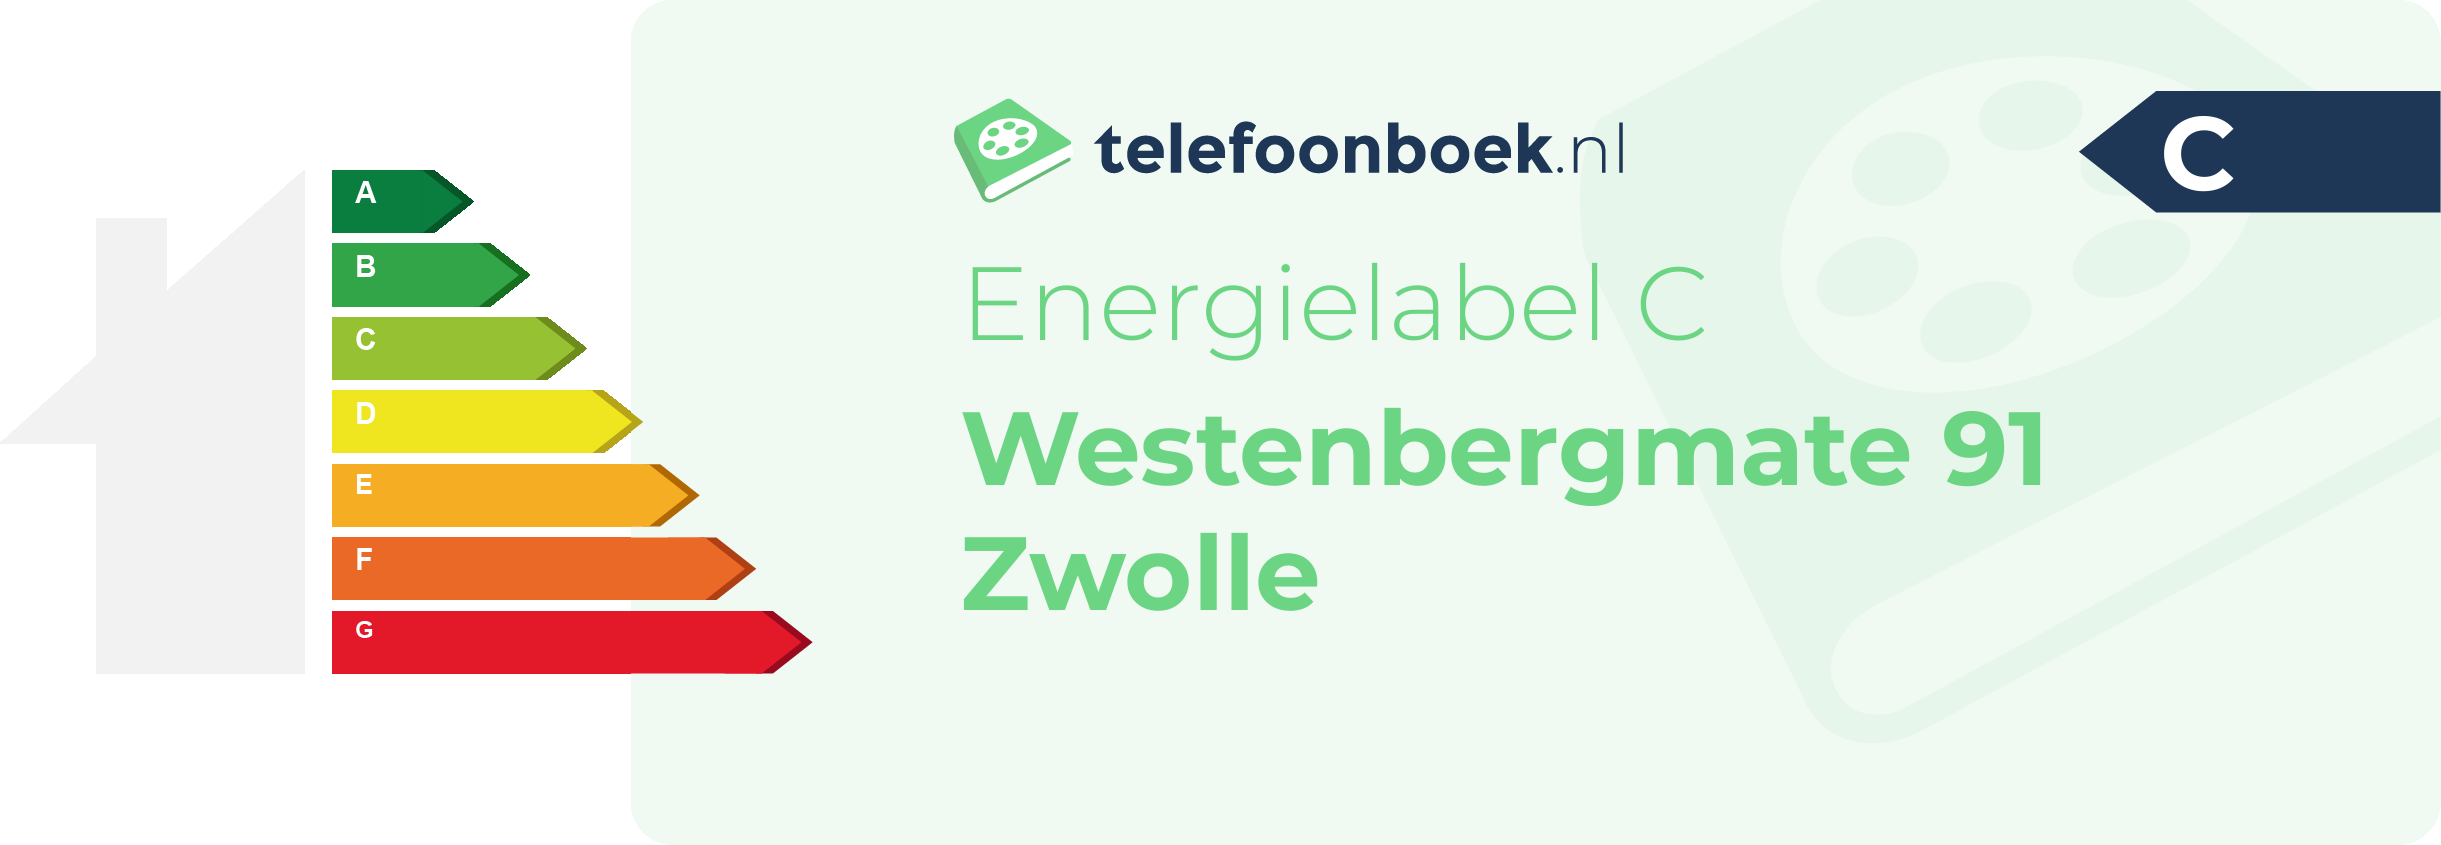 Energielabel Westenbergmate 91 Zwolle